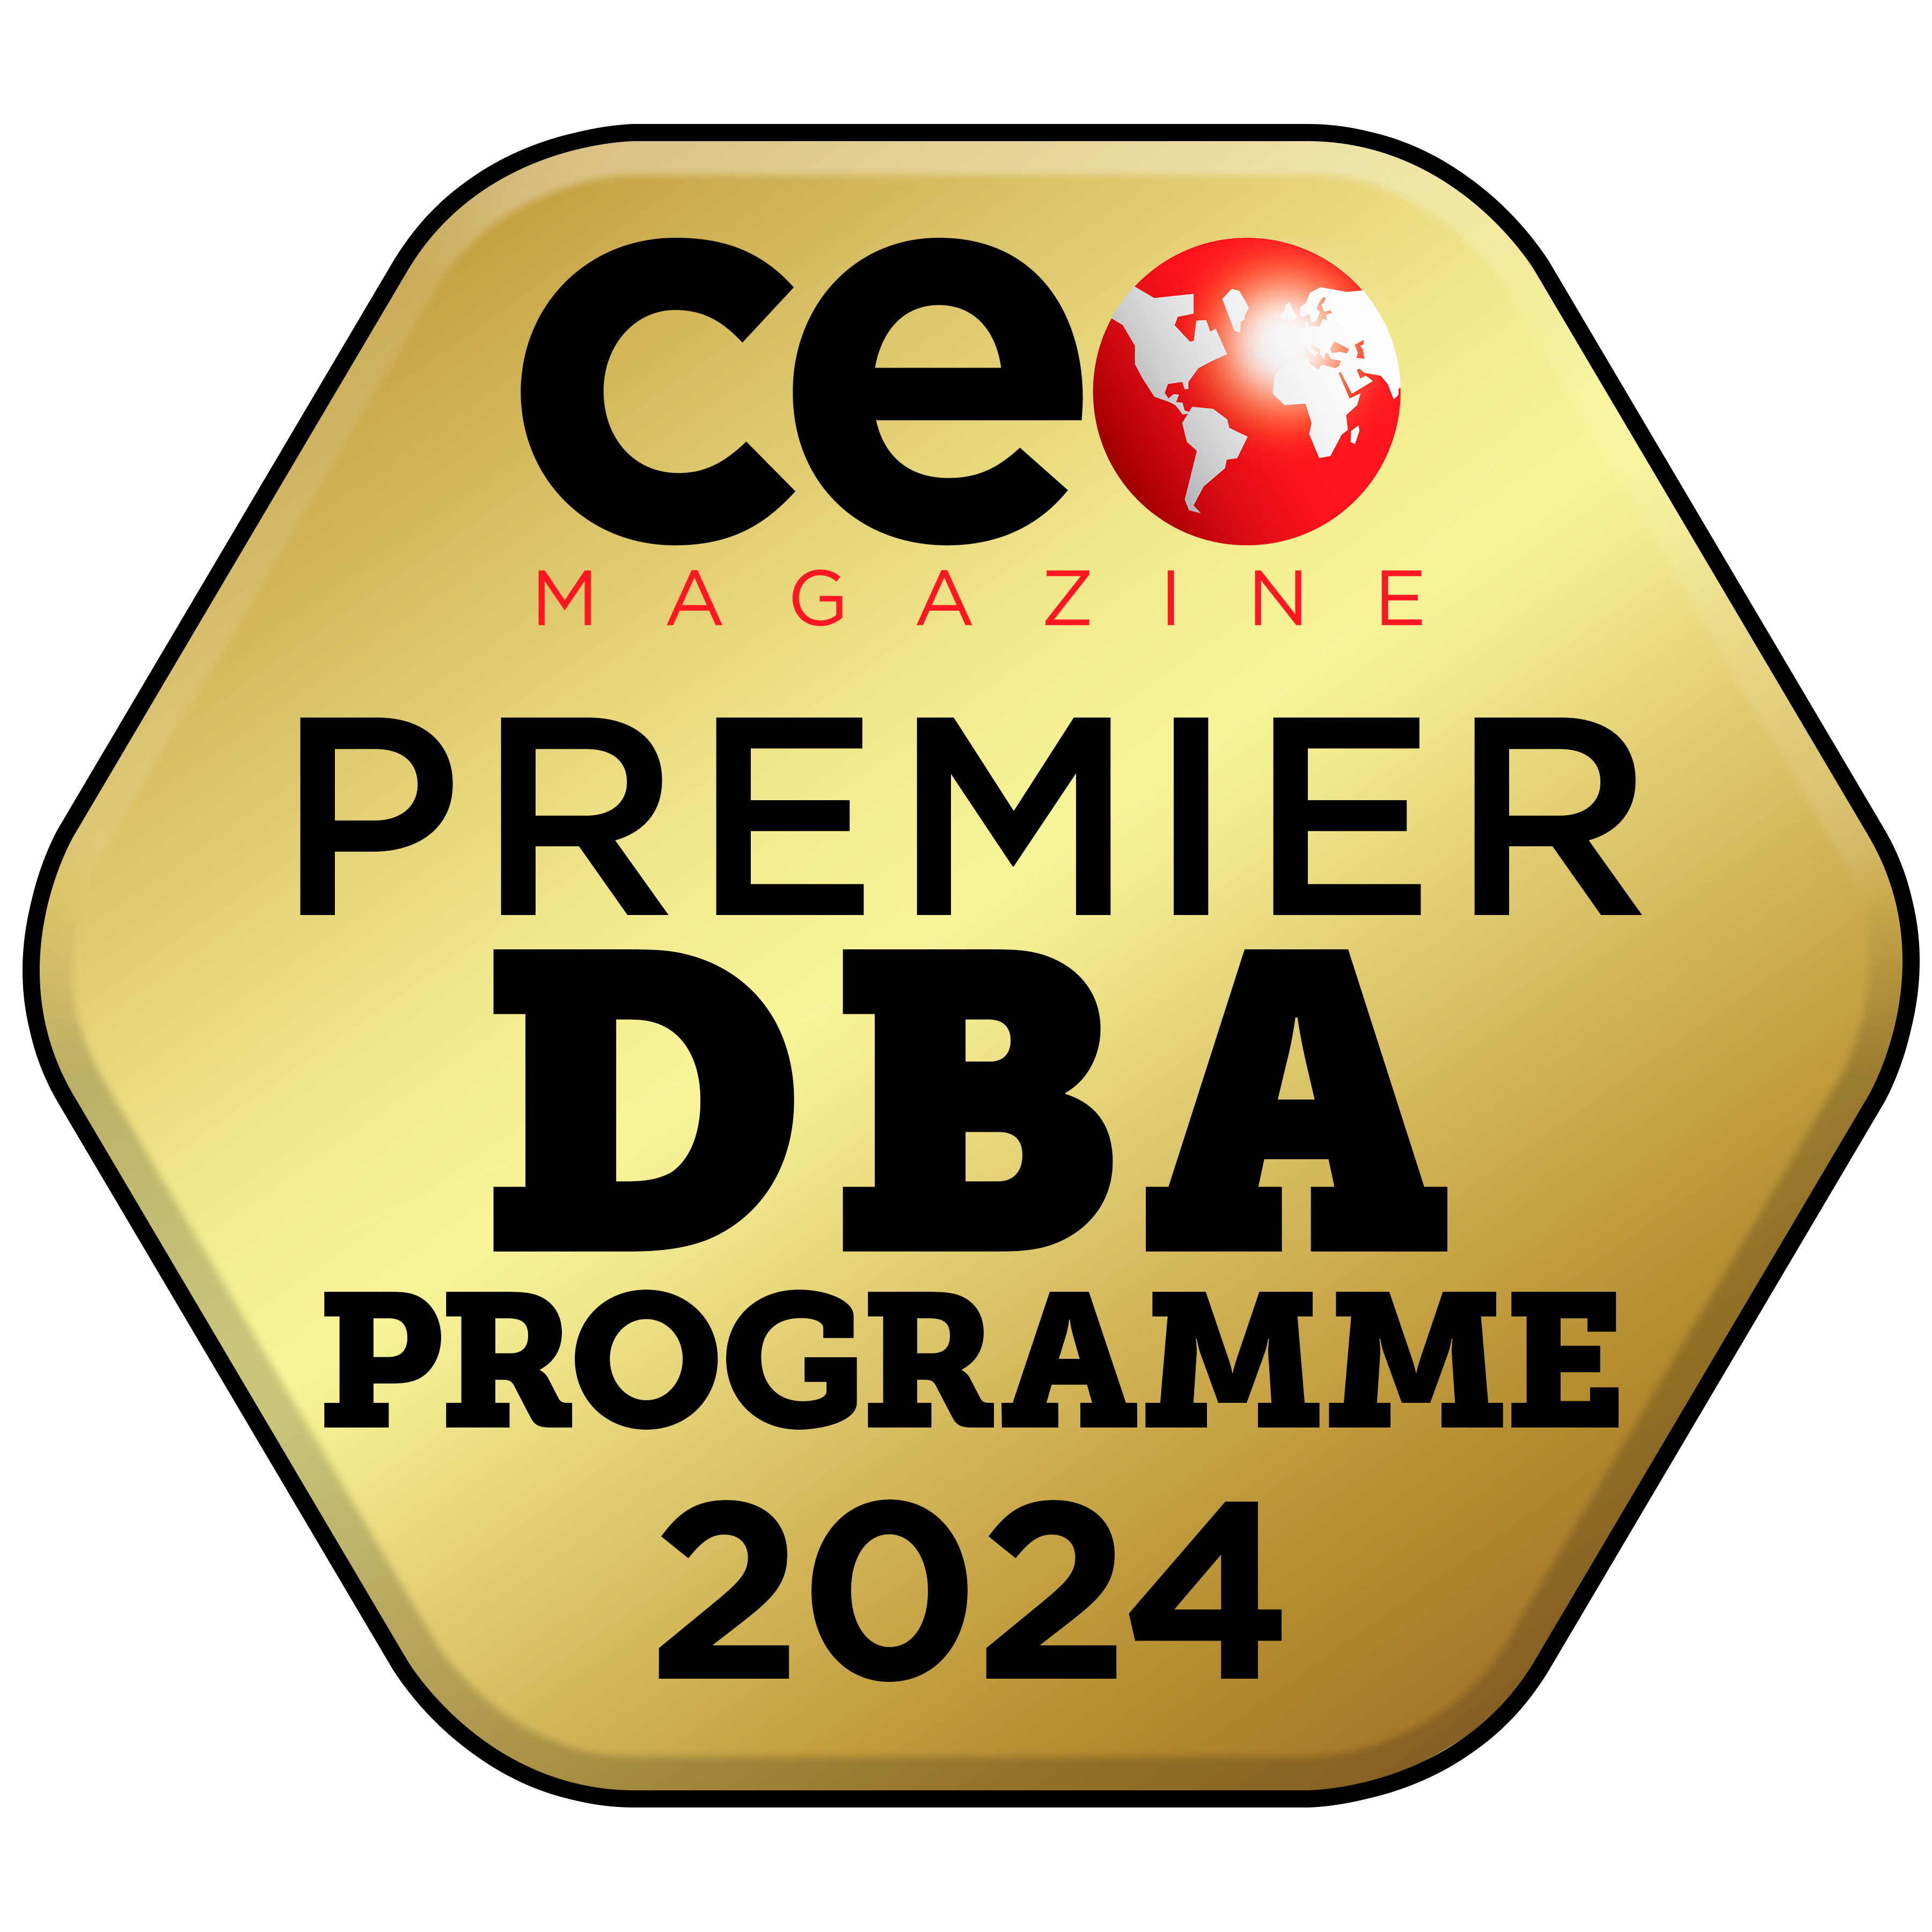 CEO Magazine Premier DBA Programme 2024